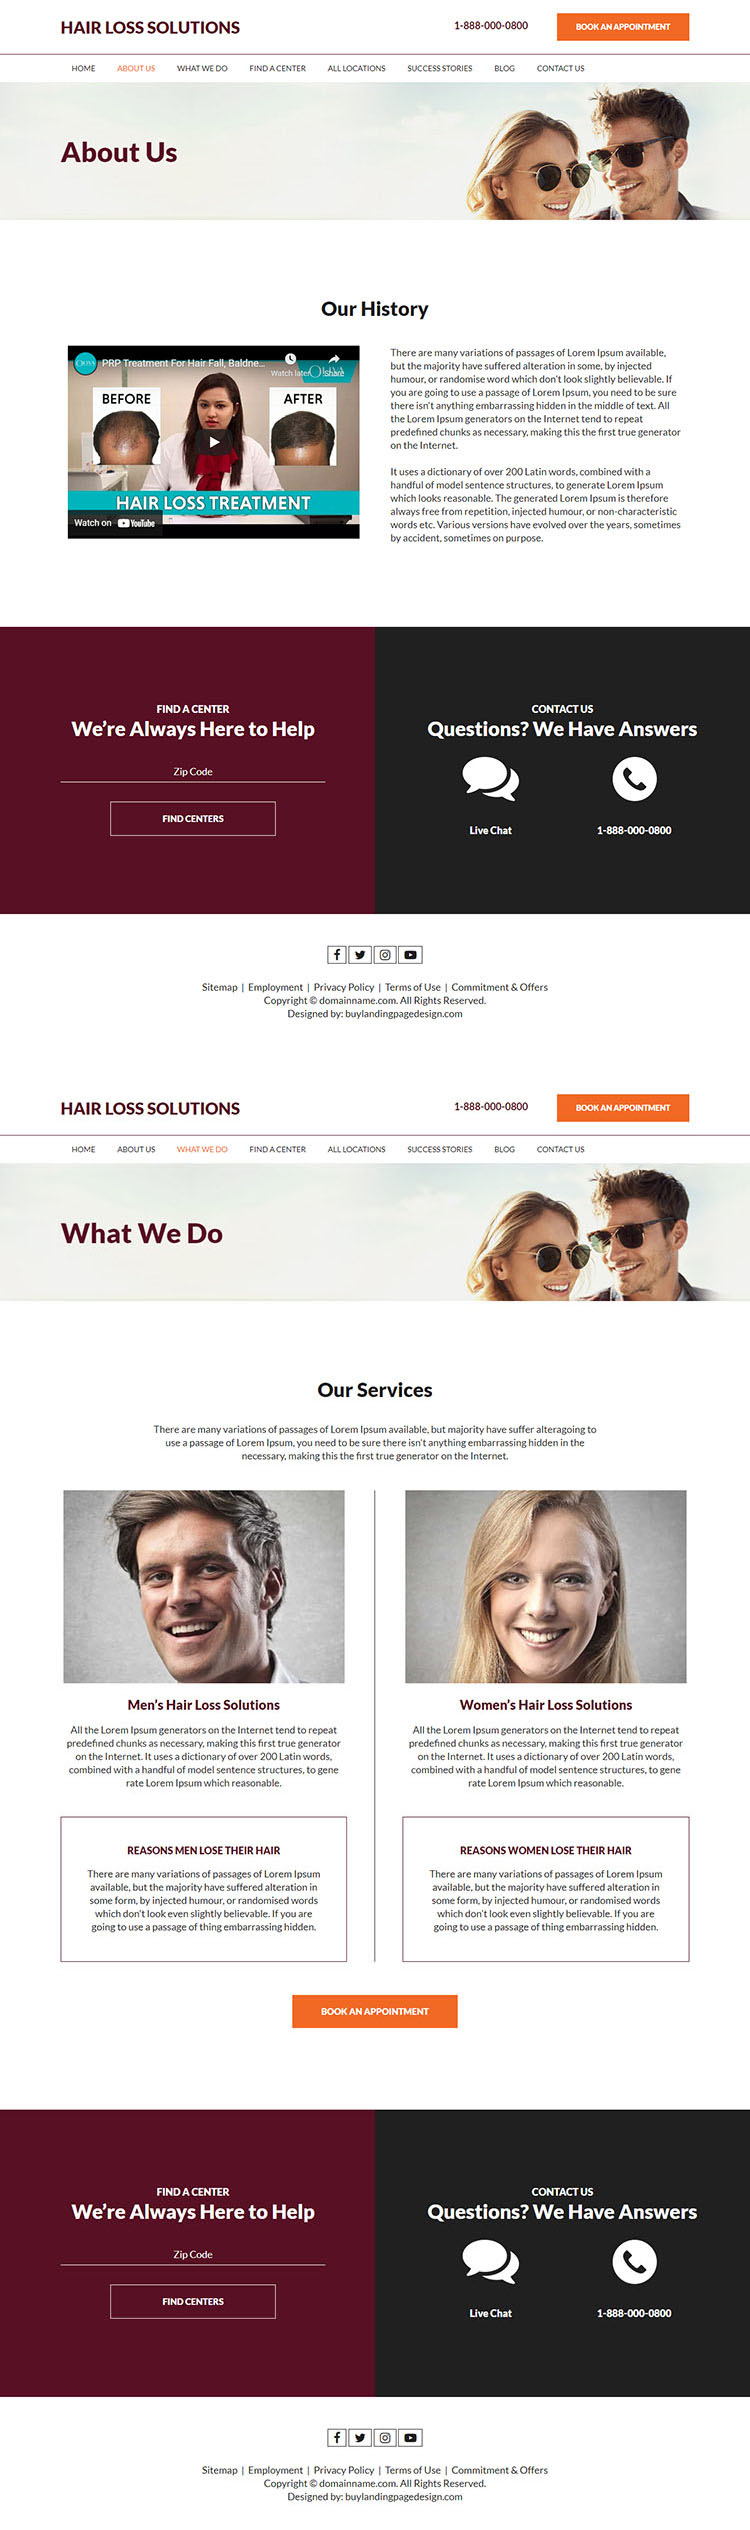 hair loss treatment for men and women responsive website design